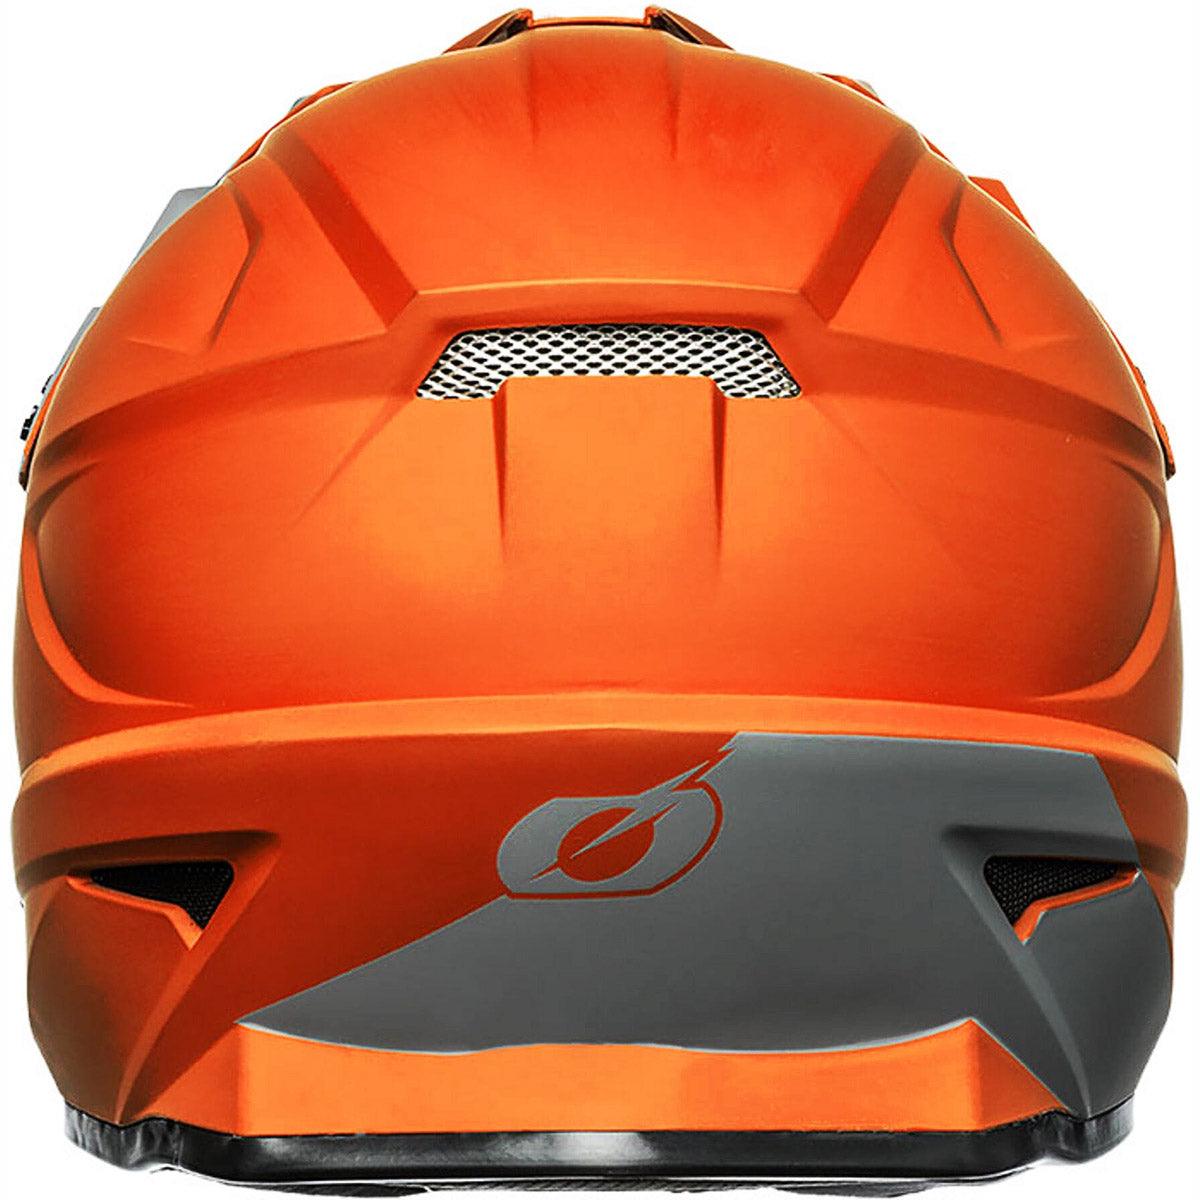 ONeal 1SRS Helmet Solid - Orange - The Motocrosshut